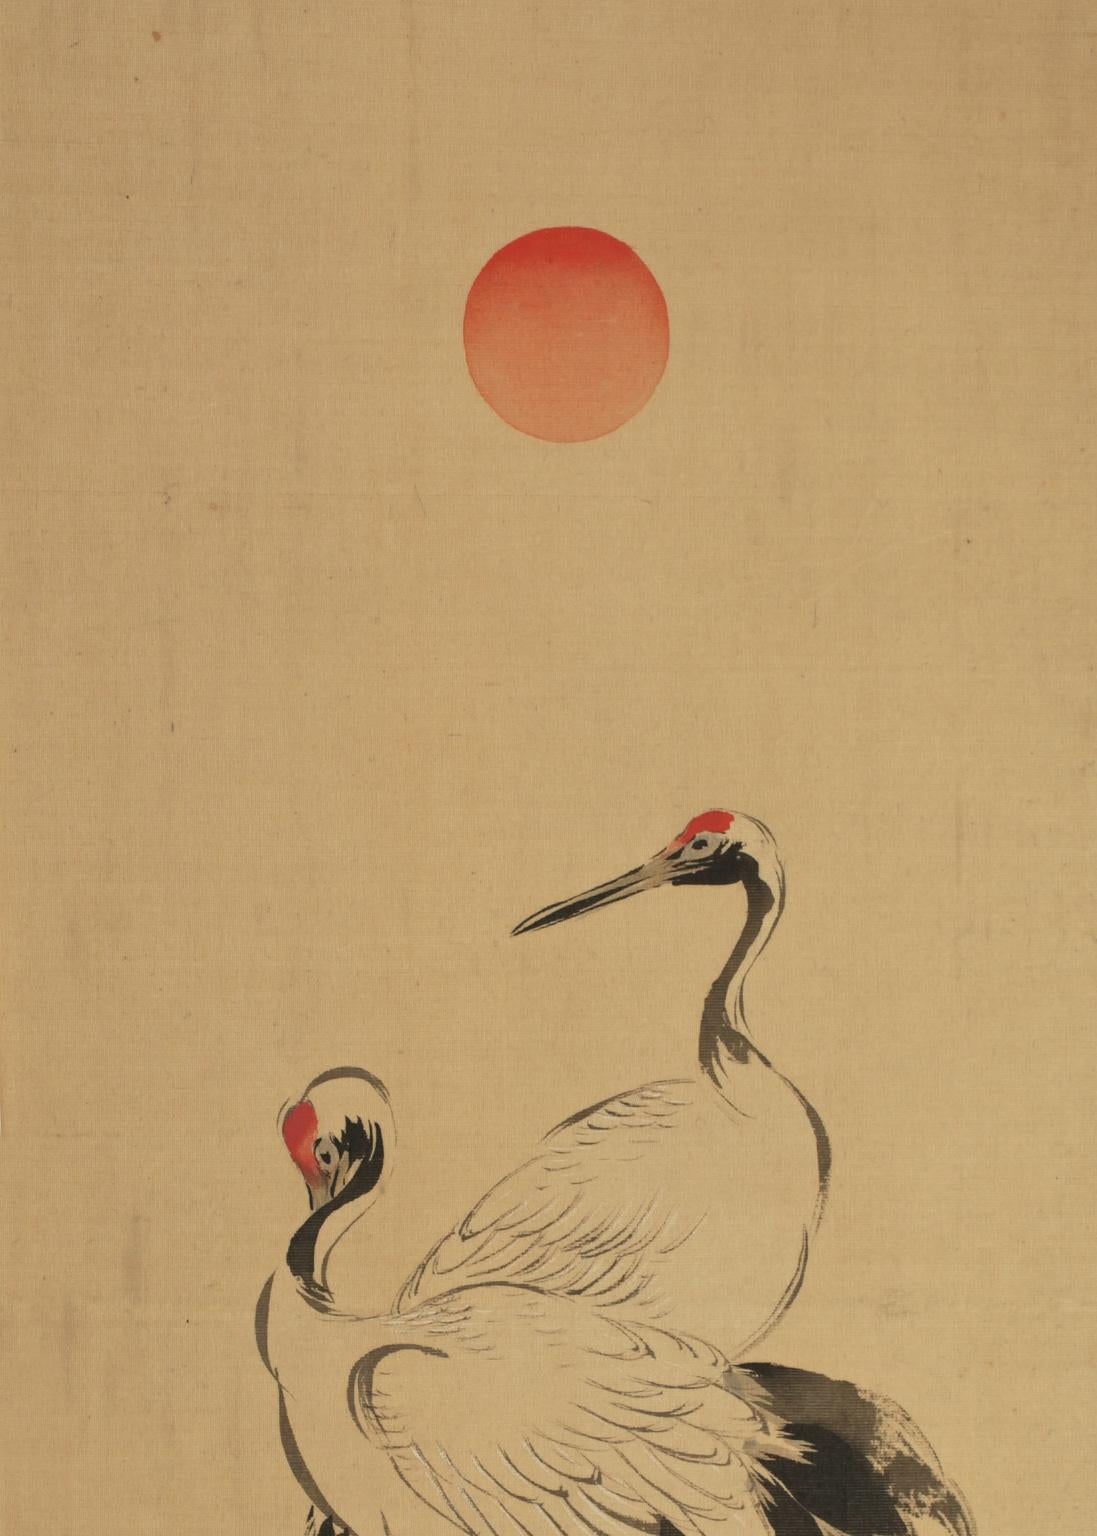 Shibata Zeshin (1807-1891)
Cranes

Sumi ink and pigments on silk, 33 x 14 cm

Signed Zeshin with seal Zeshin.